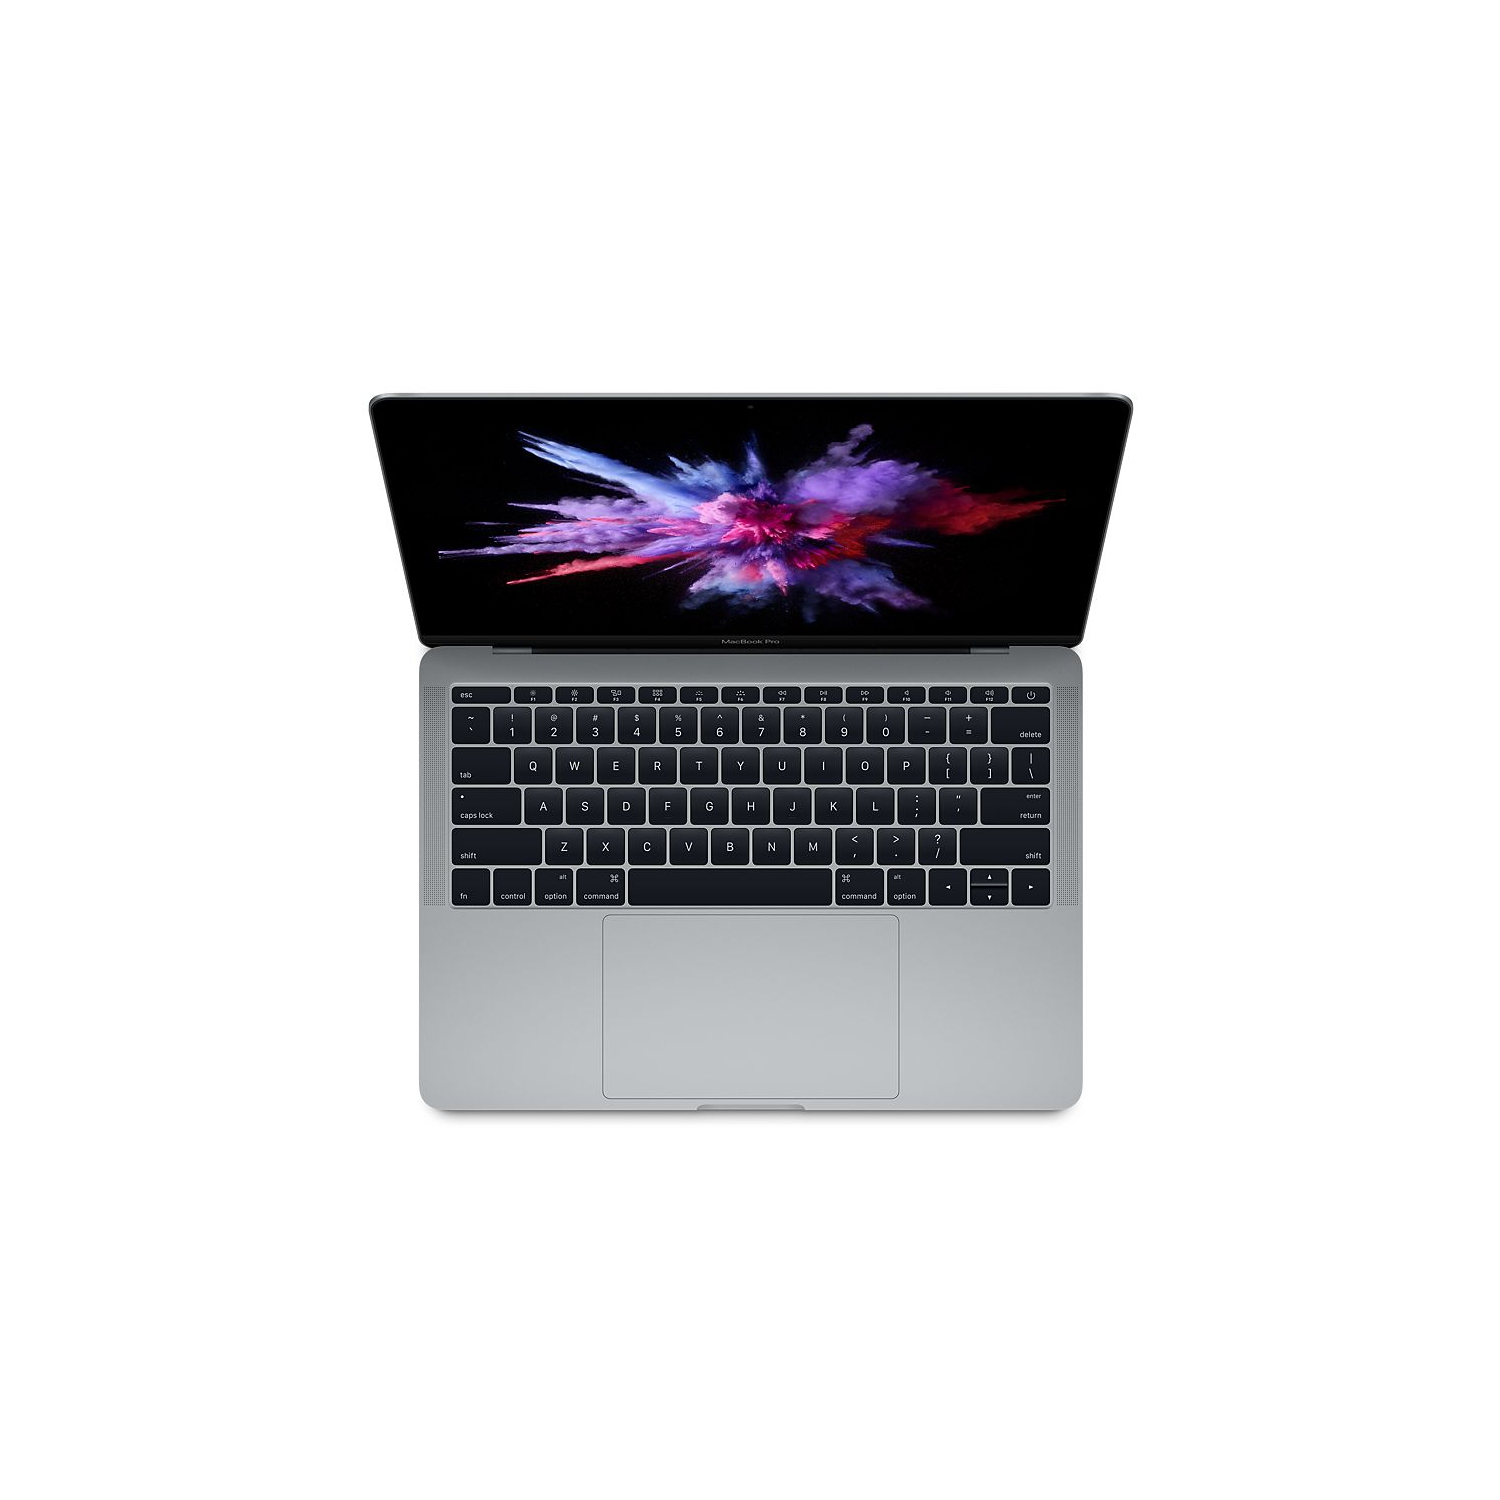 Refurbished (Excellent) - MacBook Pro 13" Retina 2.3GHz i5 8GB / 256GB - Silver - 2017 Model - Refurb, Grade A, Excellent, 9/10!